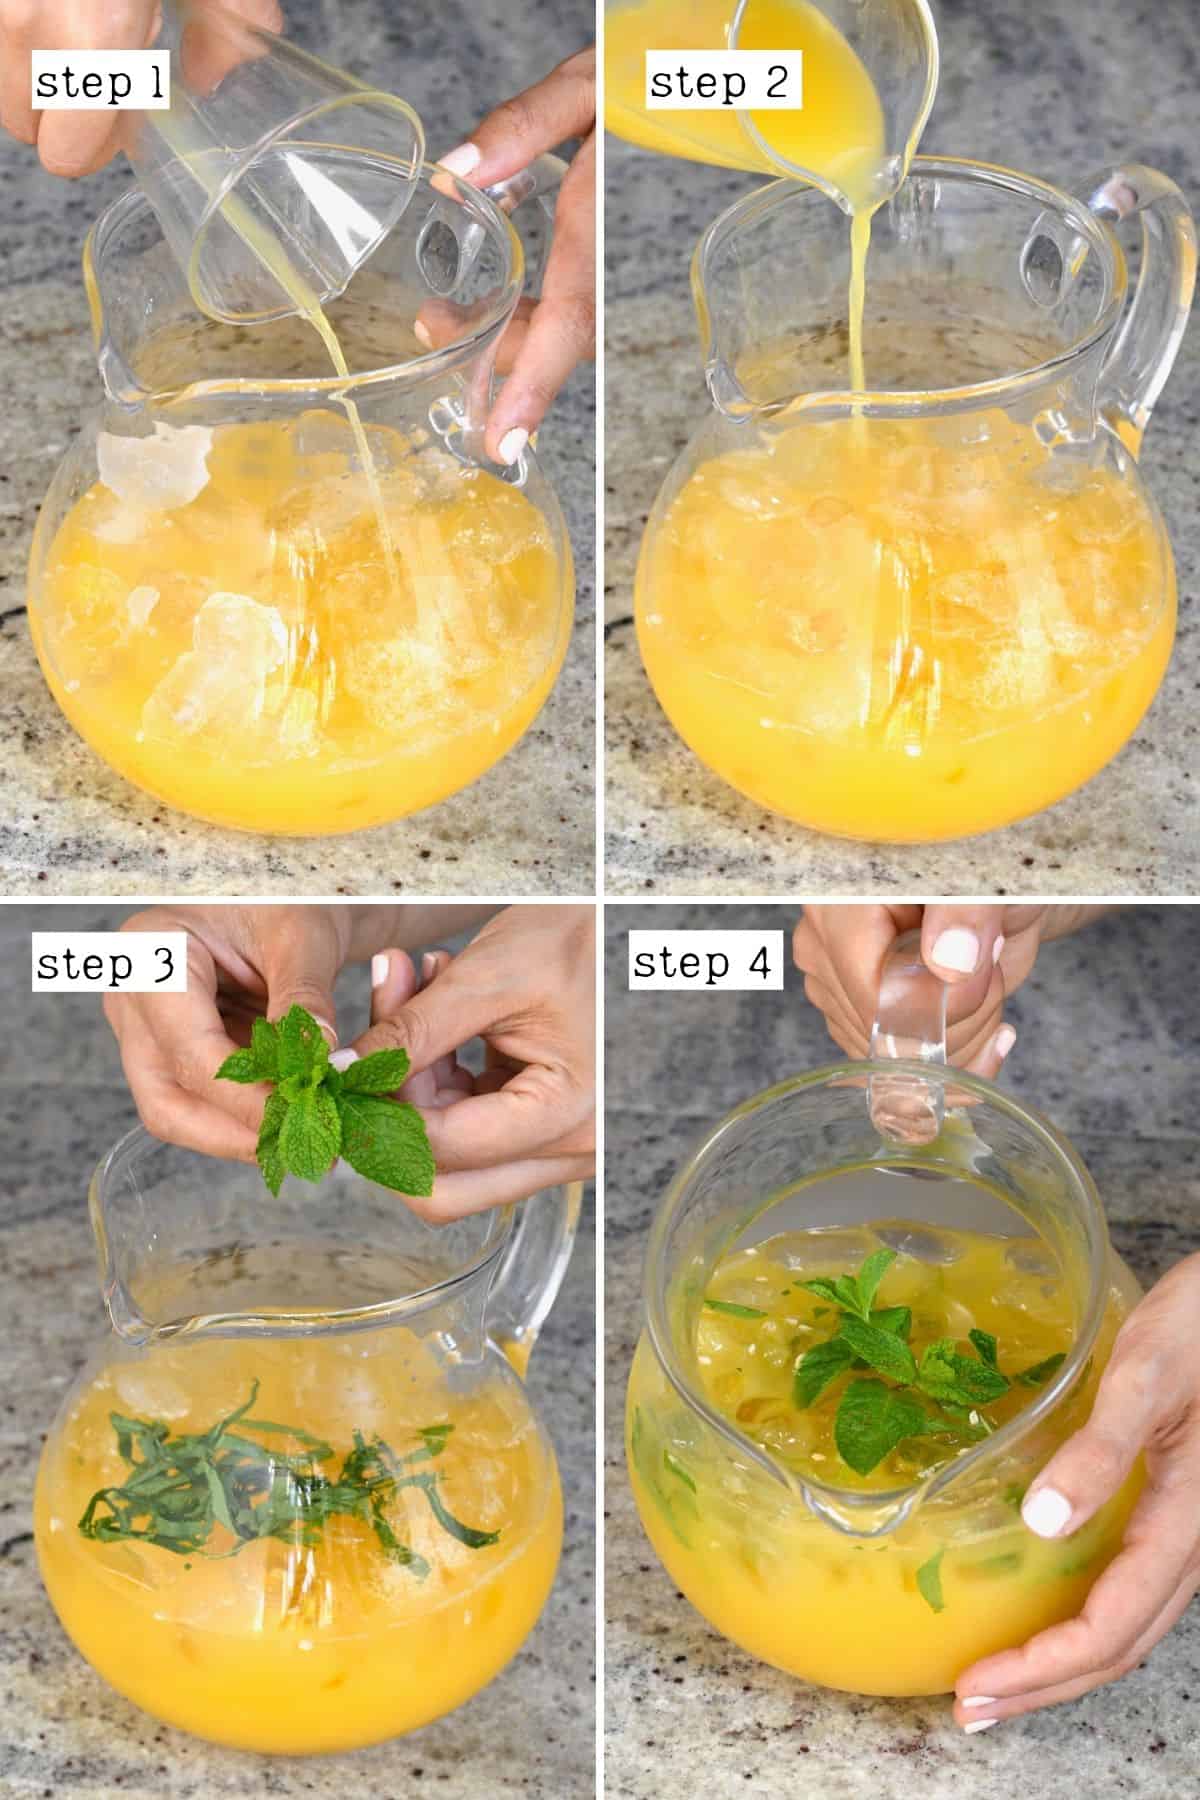 Steps for making pineapple orange juice